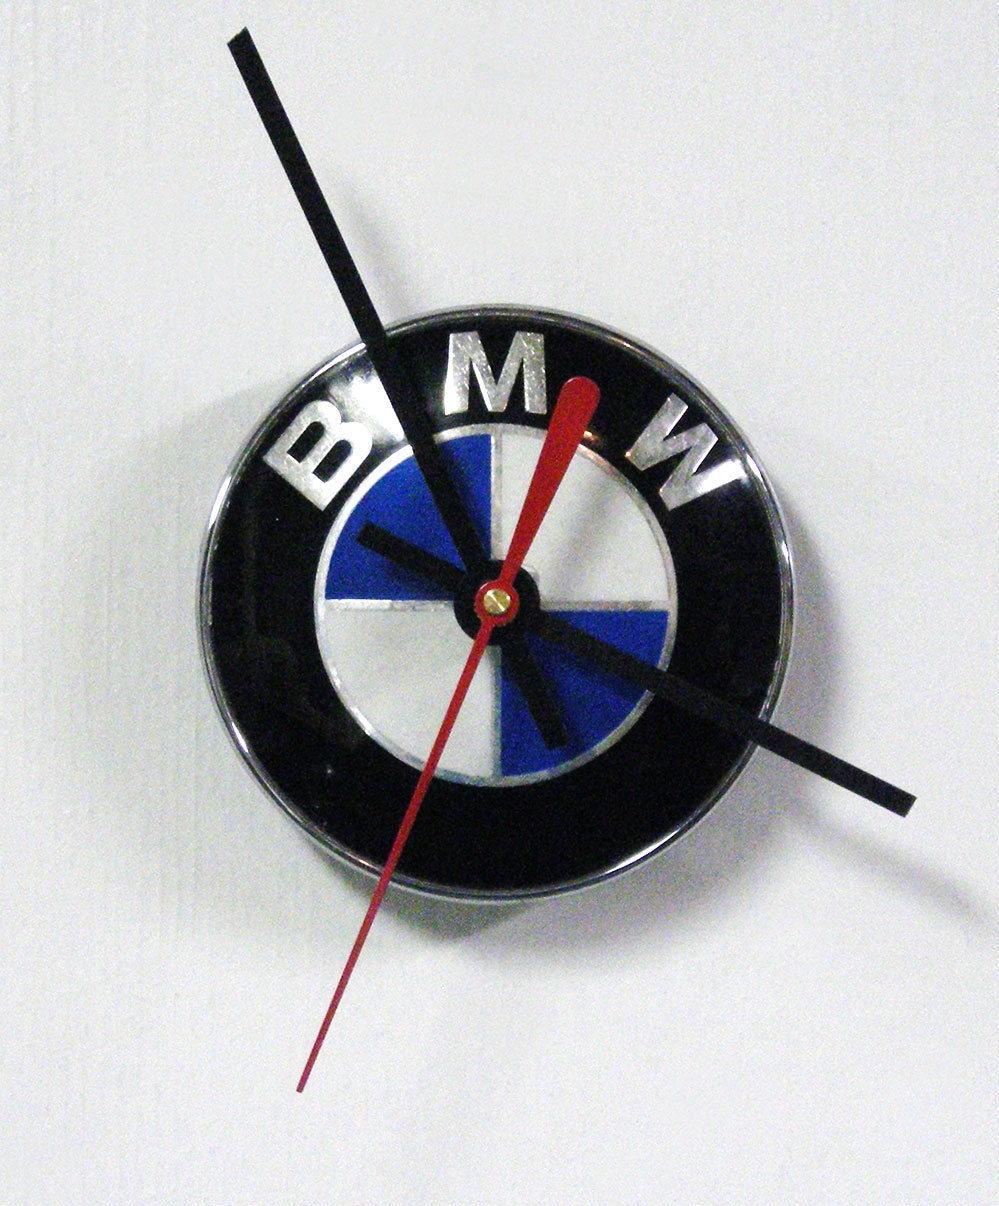 Bmw wall clock